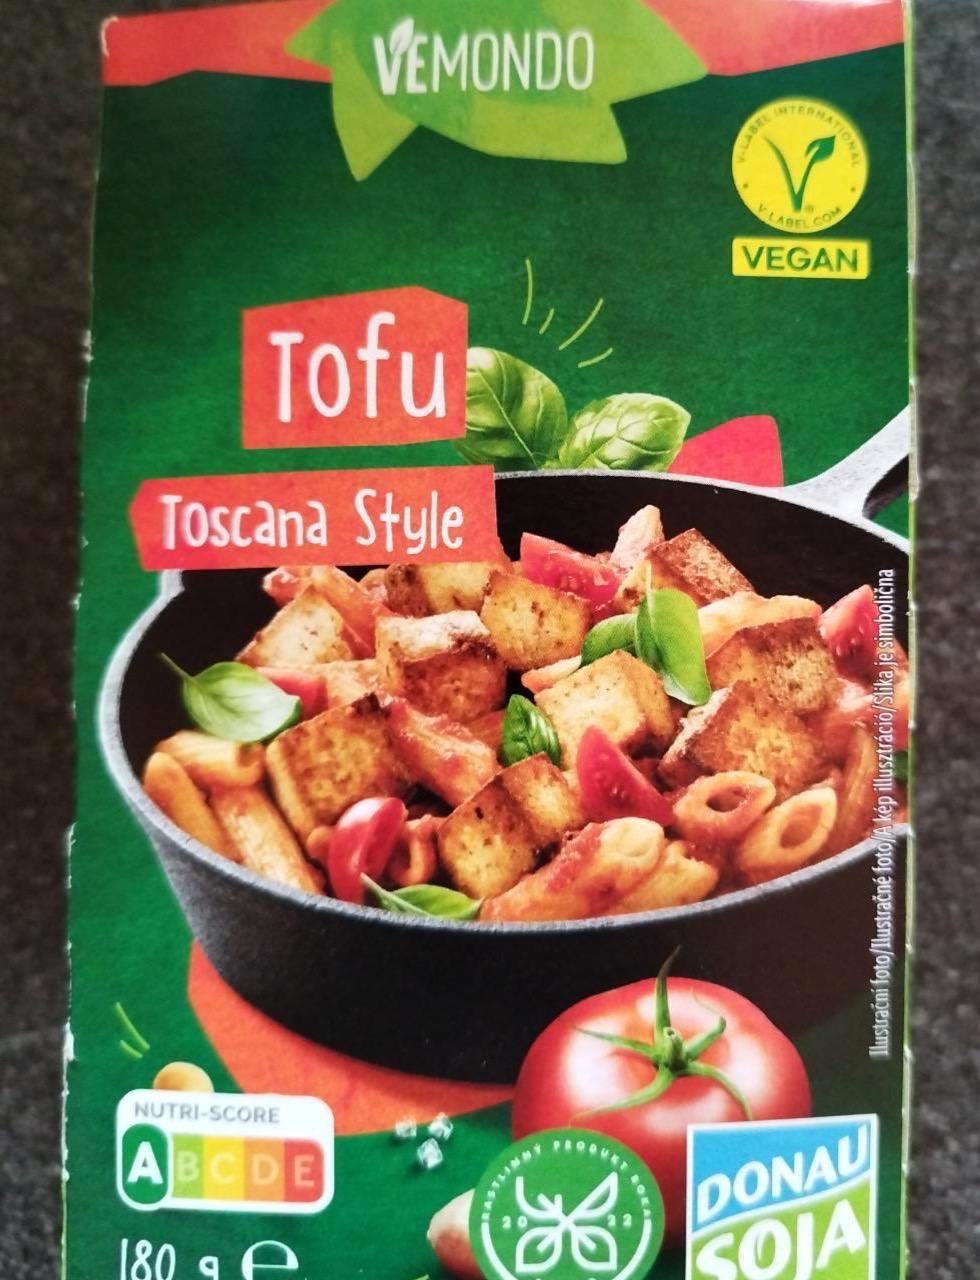 Képek - Tofu Toscana style Vemondo